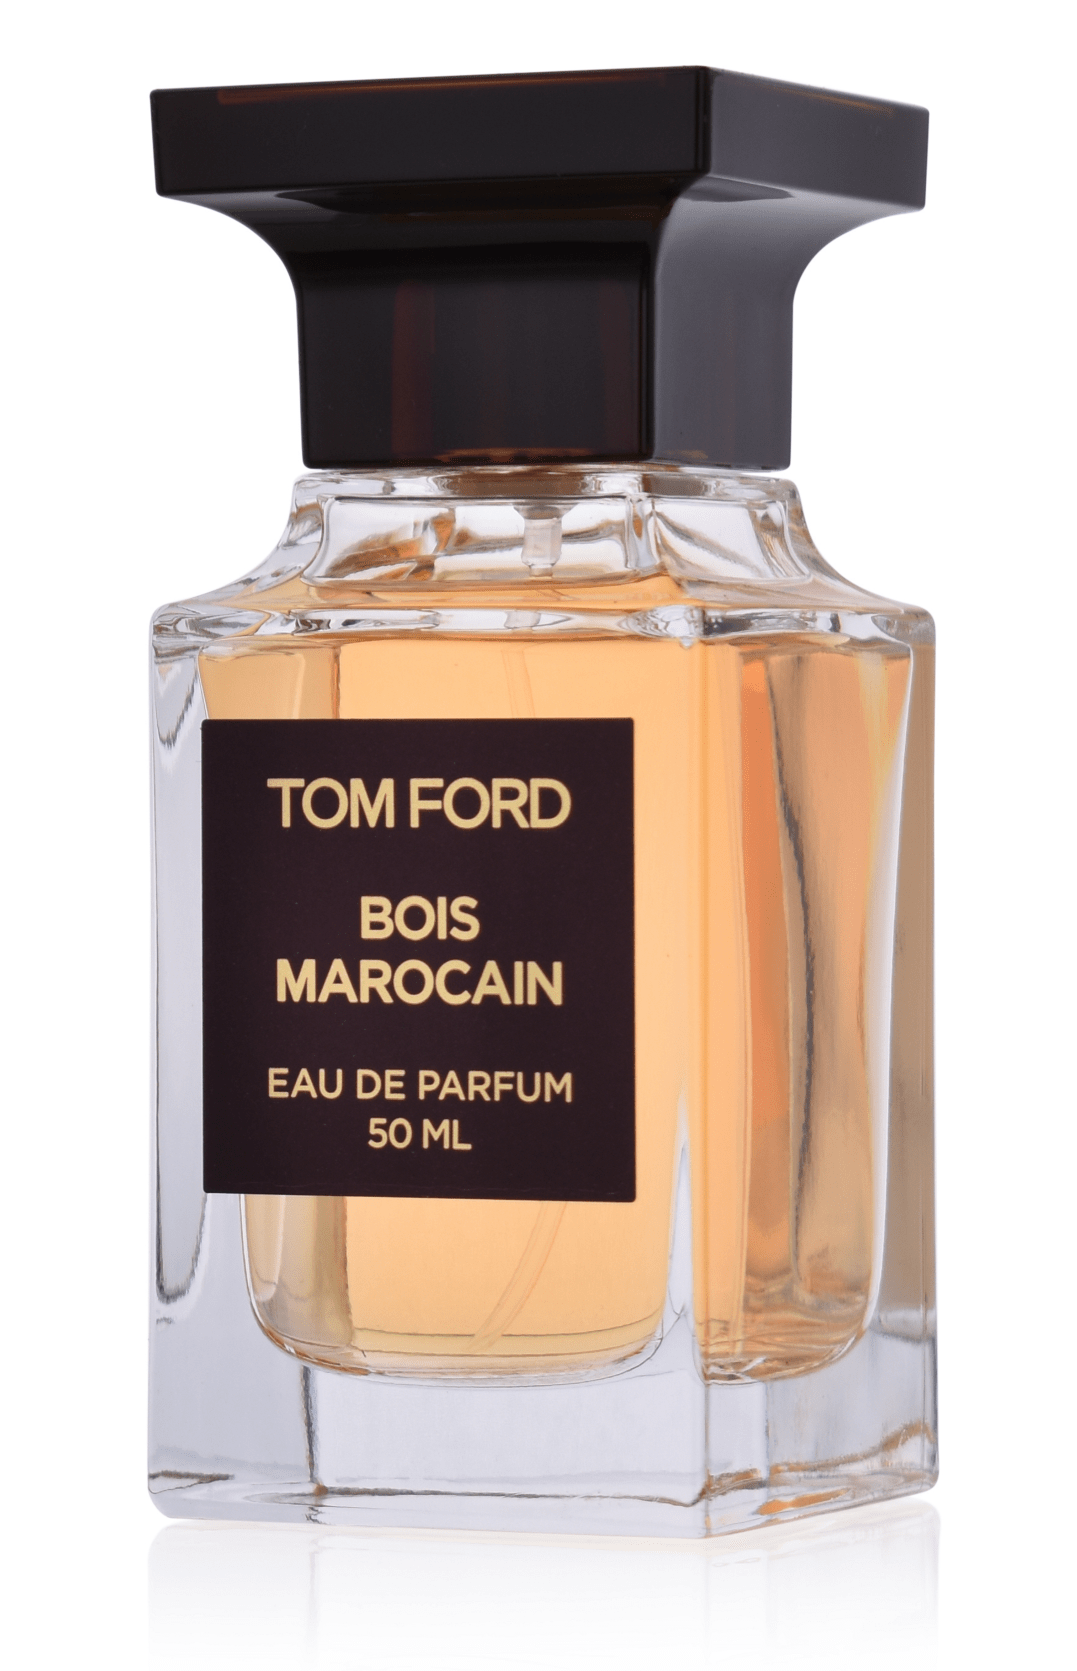 Tom Ford Bois Marocain 50 ml Eau de Parfum  